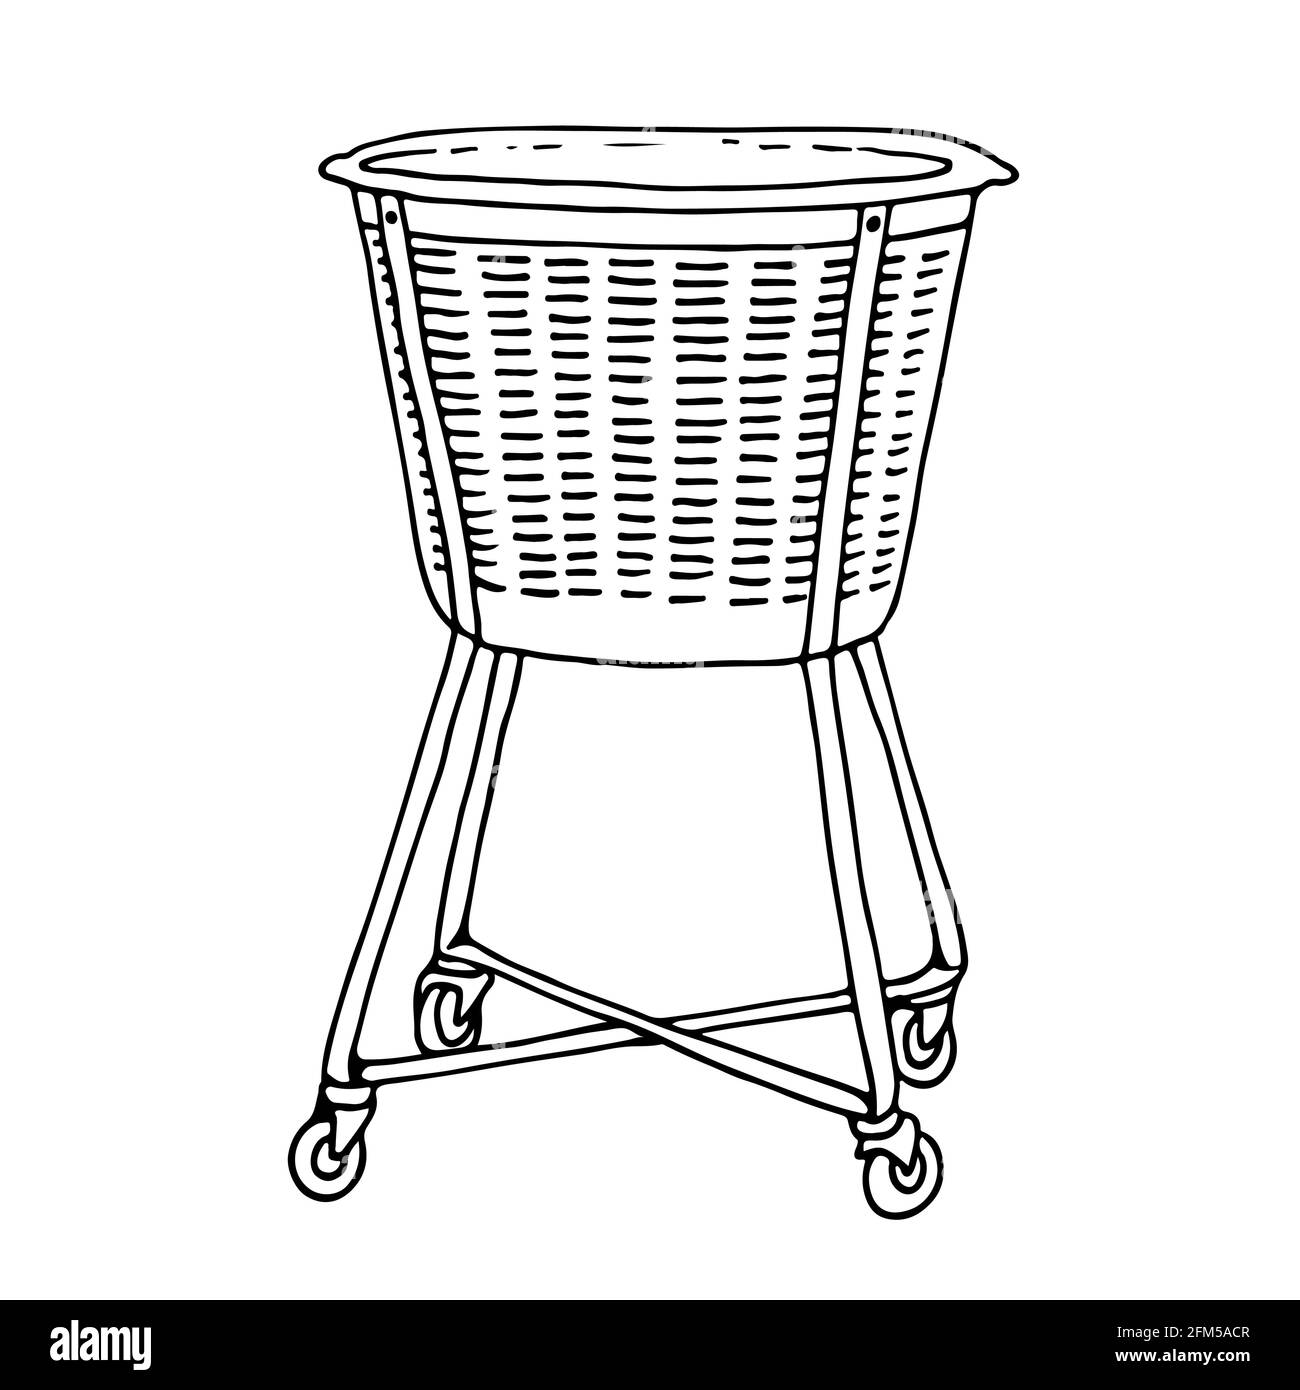 Laundry Bucket Vector Cartoon Illustration Isolated On A White